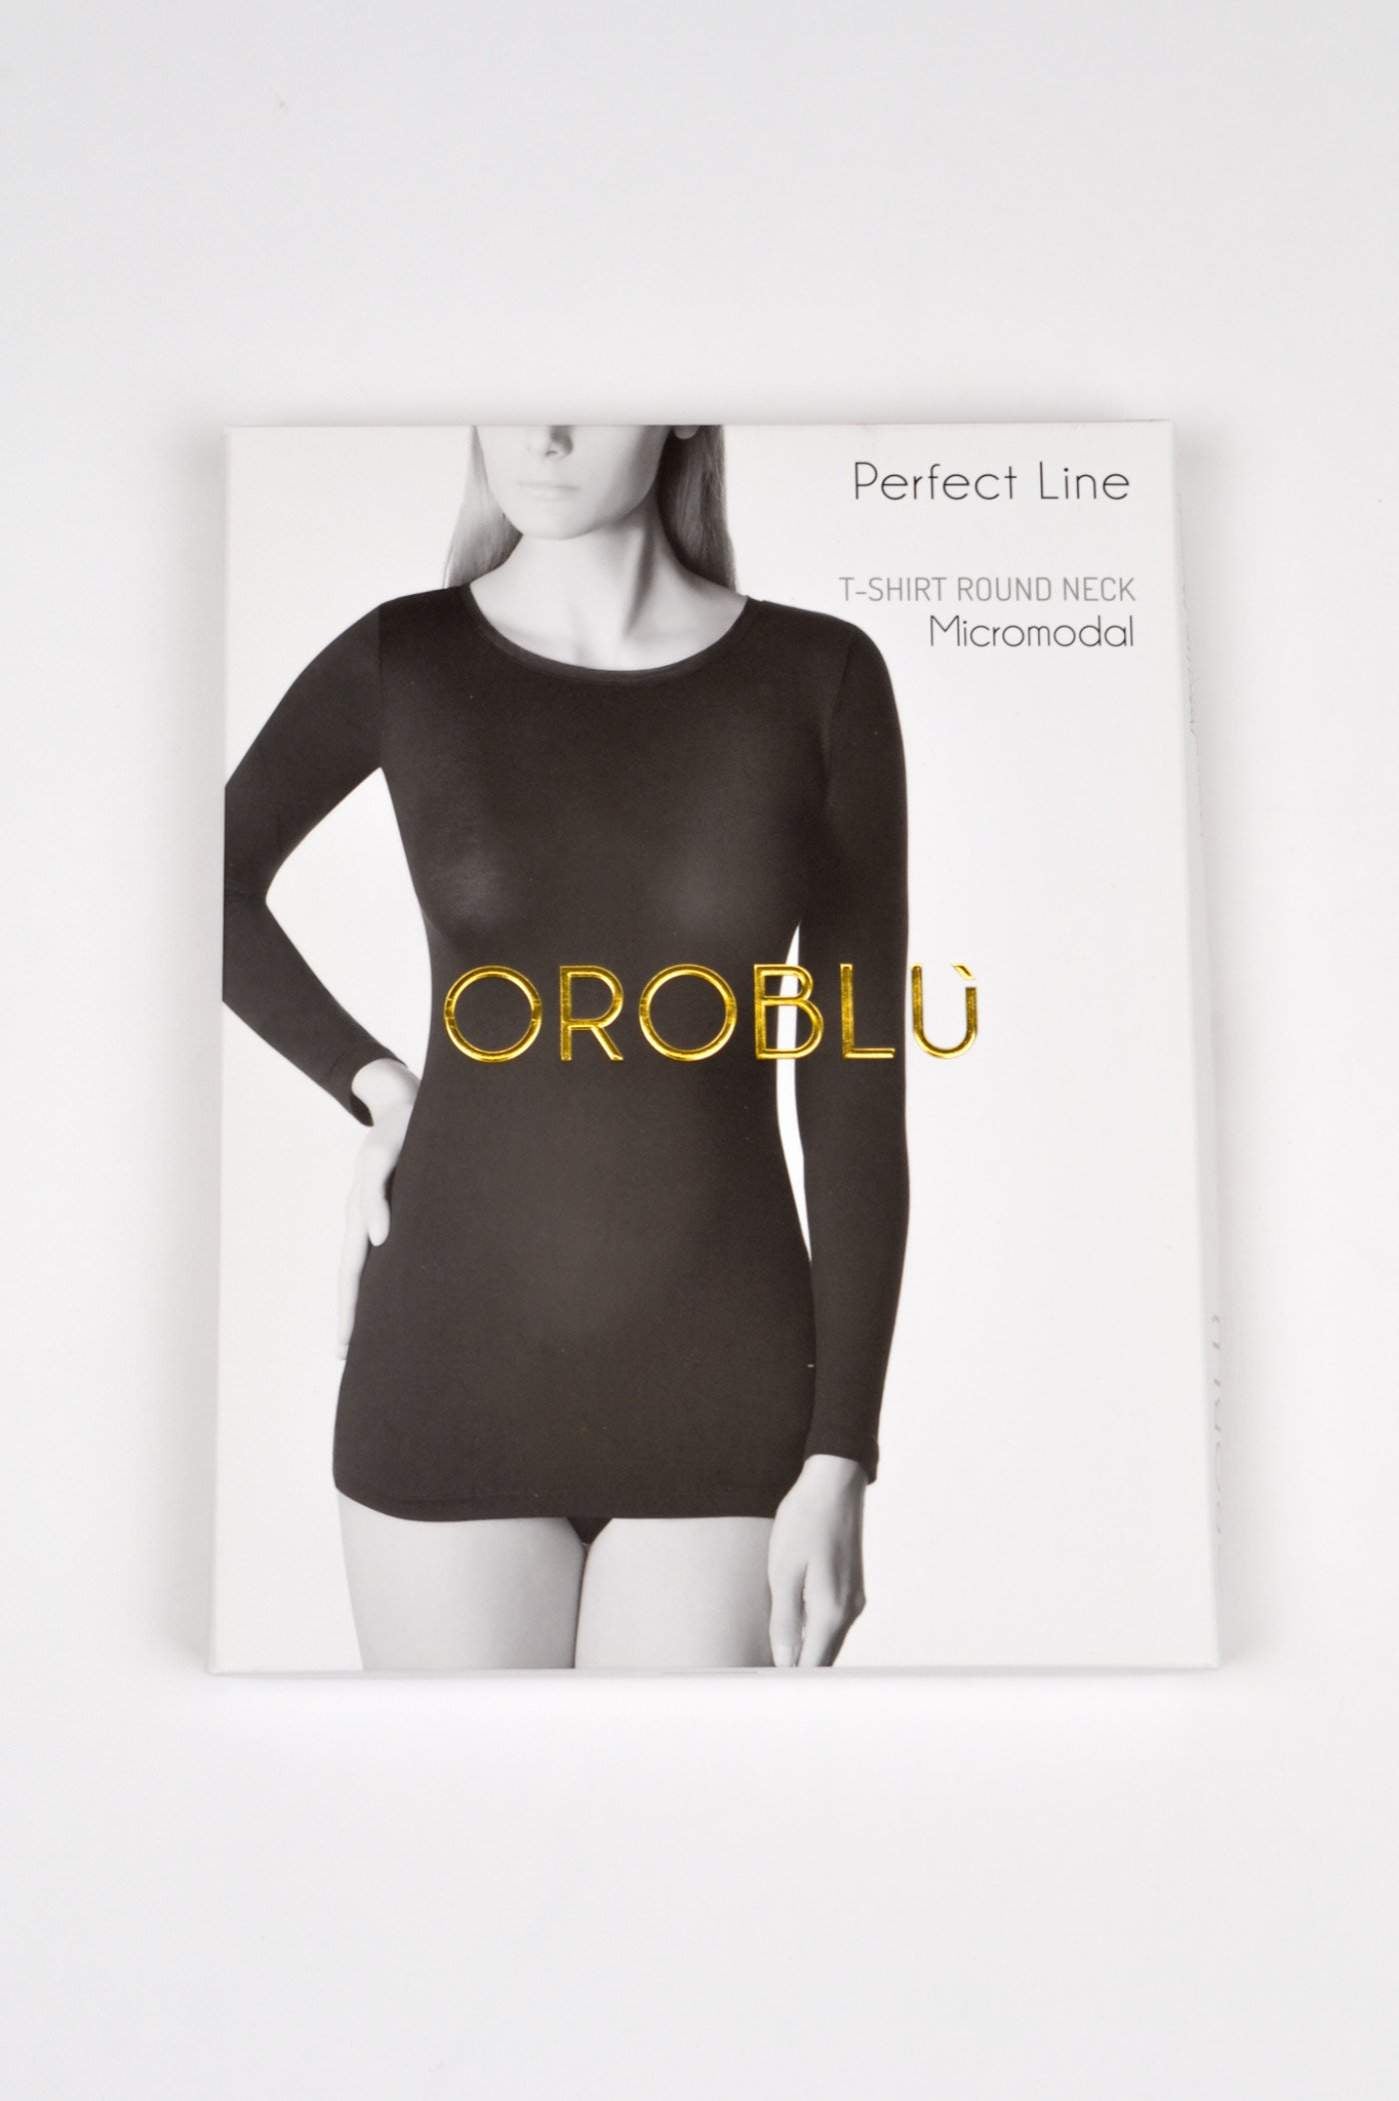 OROBLU PERFECT LINE T-SHIRT L/SL MRL-Oroblu-2104,5681610003-Product.Number,6712996-ProductId,Beige,Dame,Oroblu,Undertøy